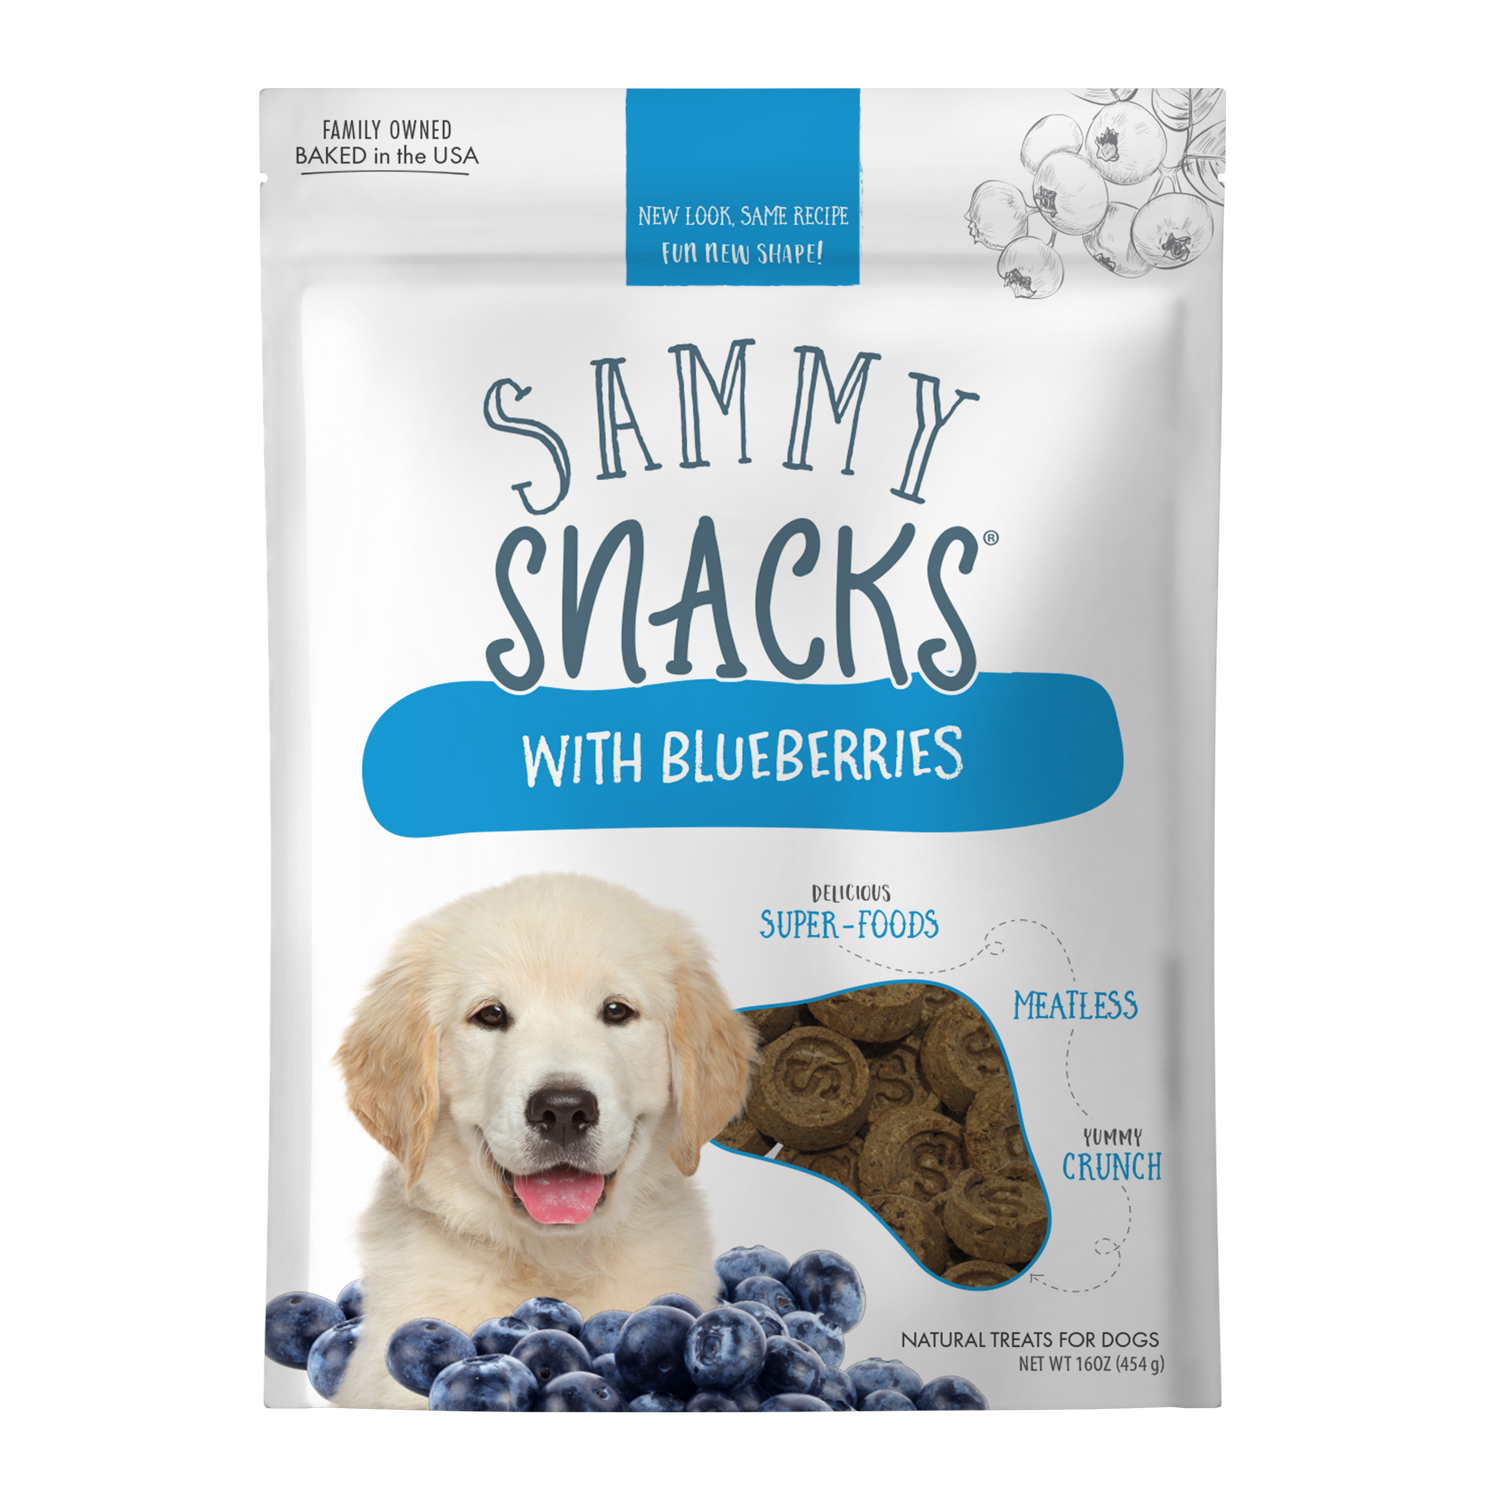 Sammy Snacks With Blueberries